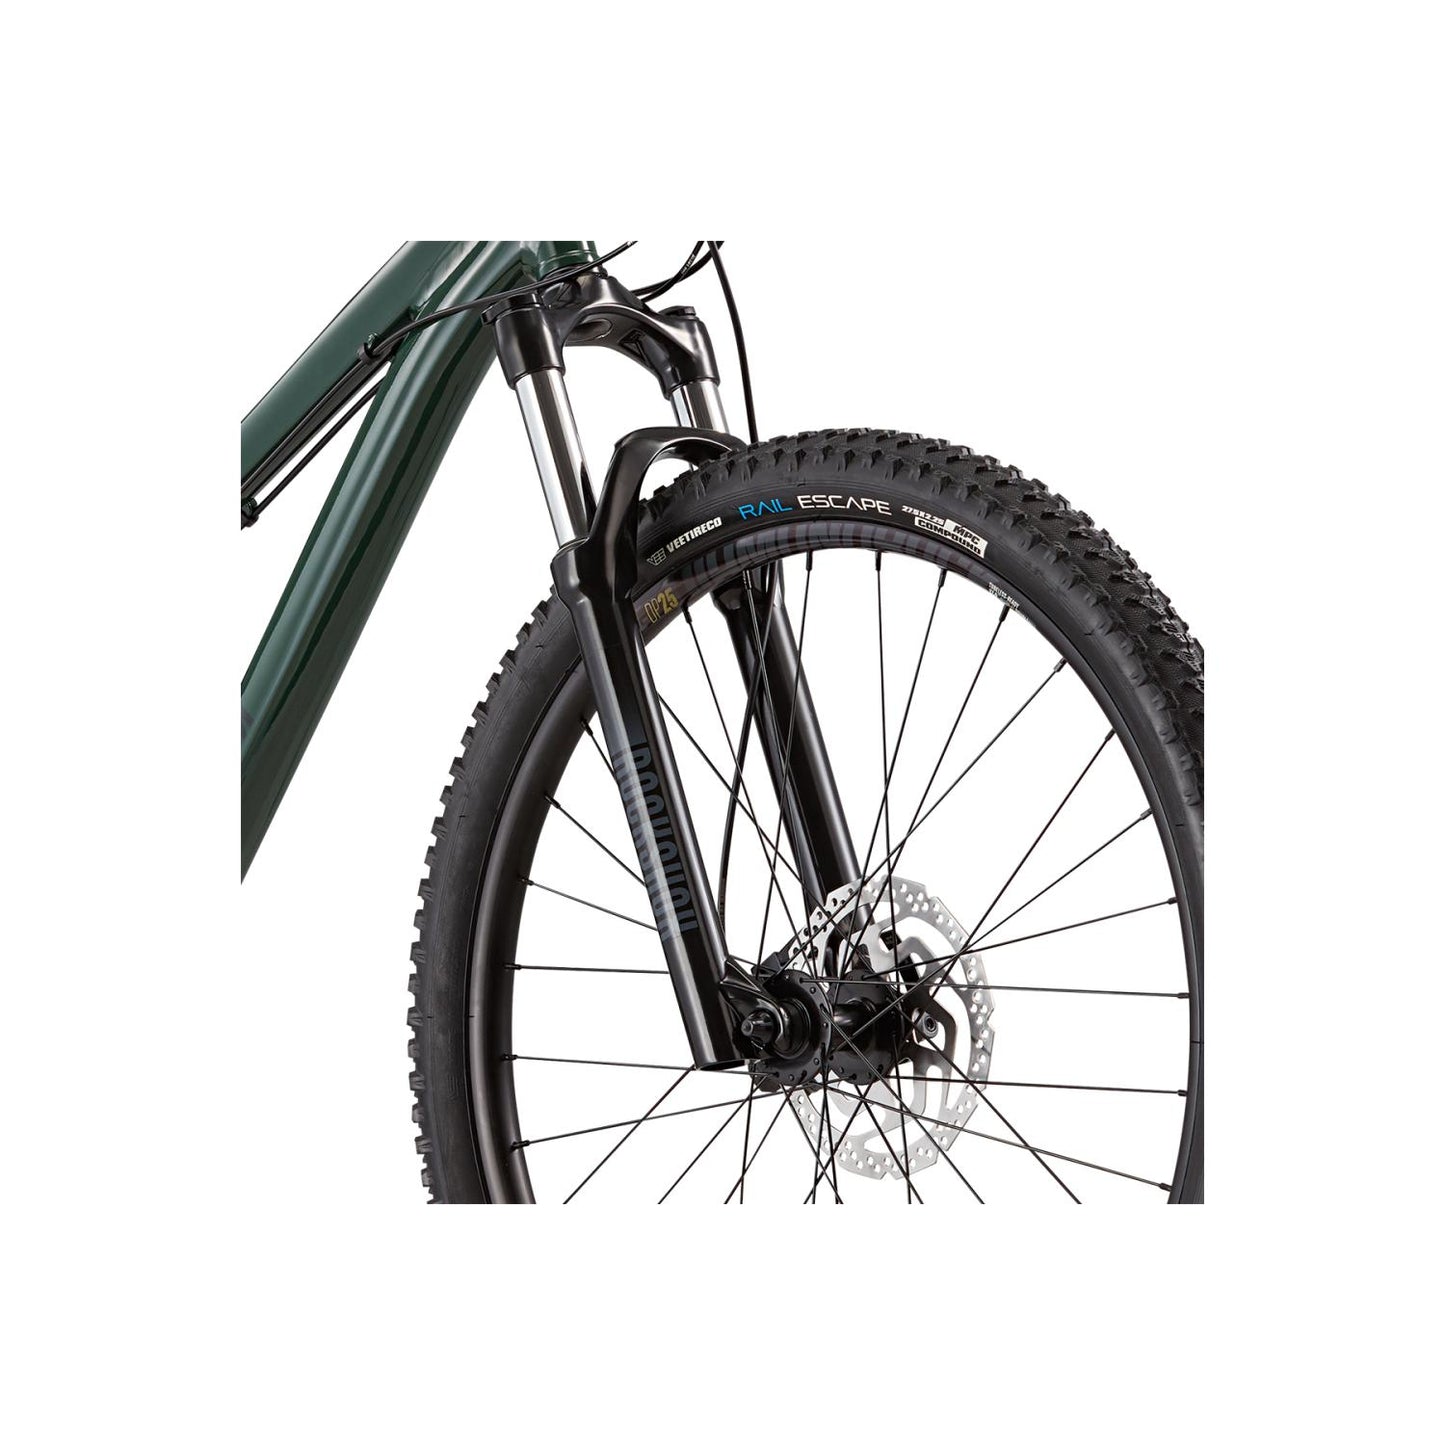 Diamondback Lux 2 Mountain Bike - Bikes - Bicycle Warehouse